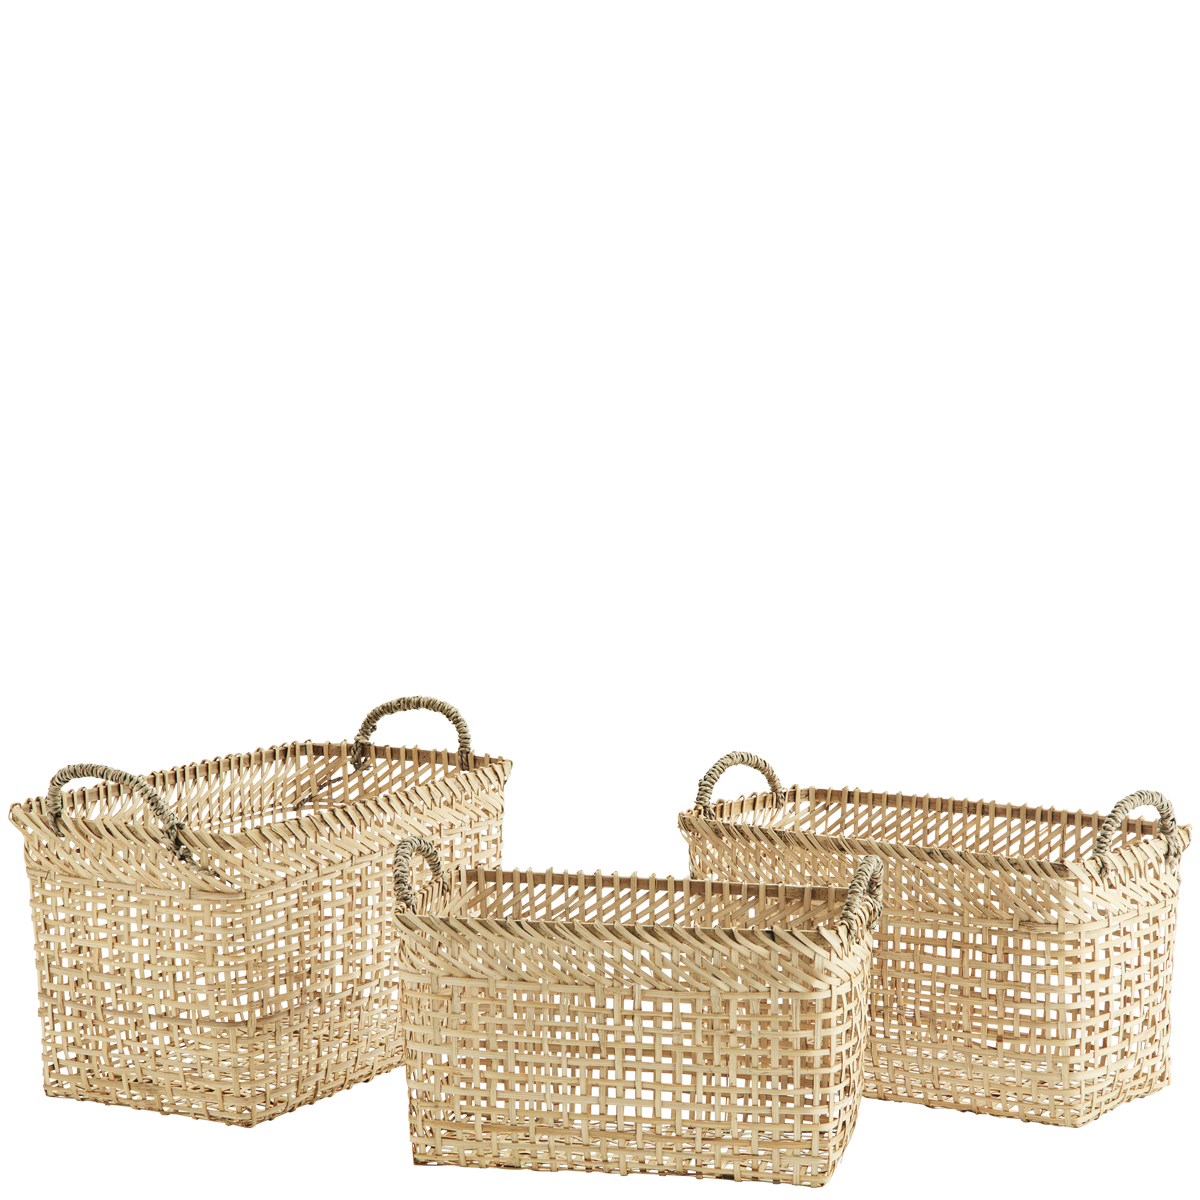 Rectangular bamboo baskets